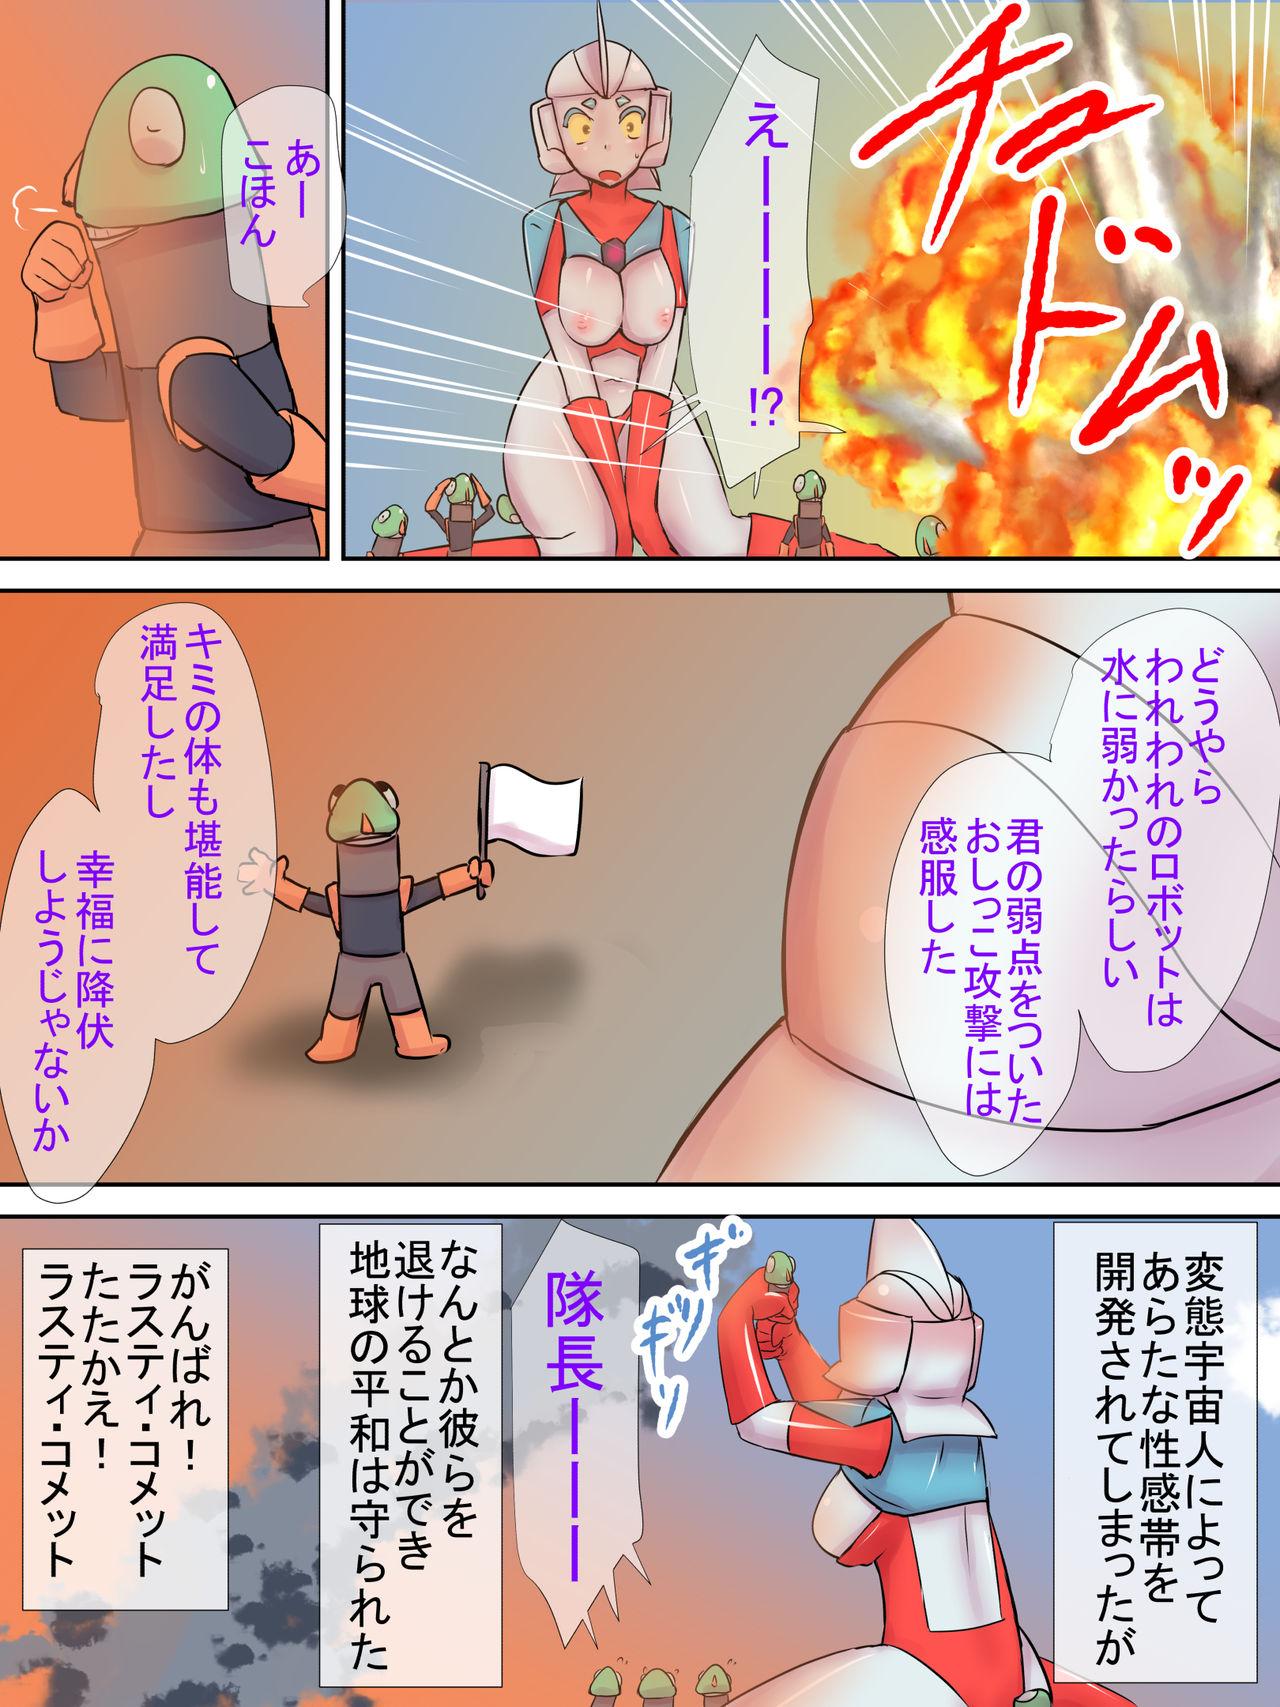 [Elephant Jelly] Tokusatsu Heroine Series - Rusty Comet Ch. 3 - Shinryaku Sareru Heroine (Ultraman) 31